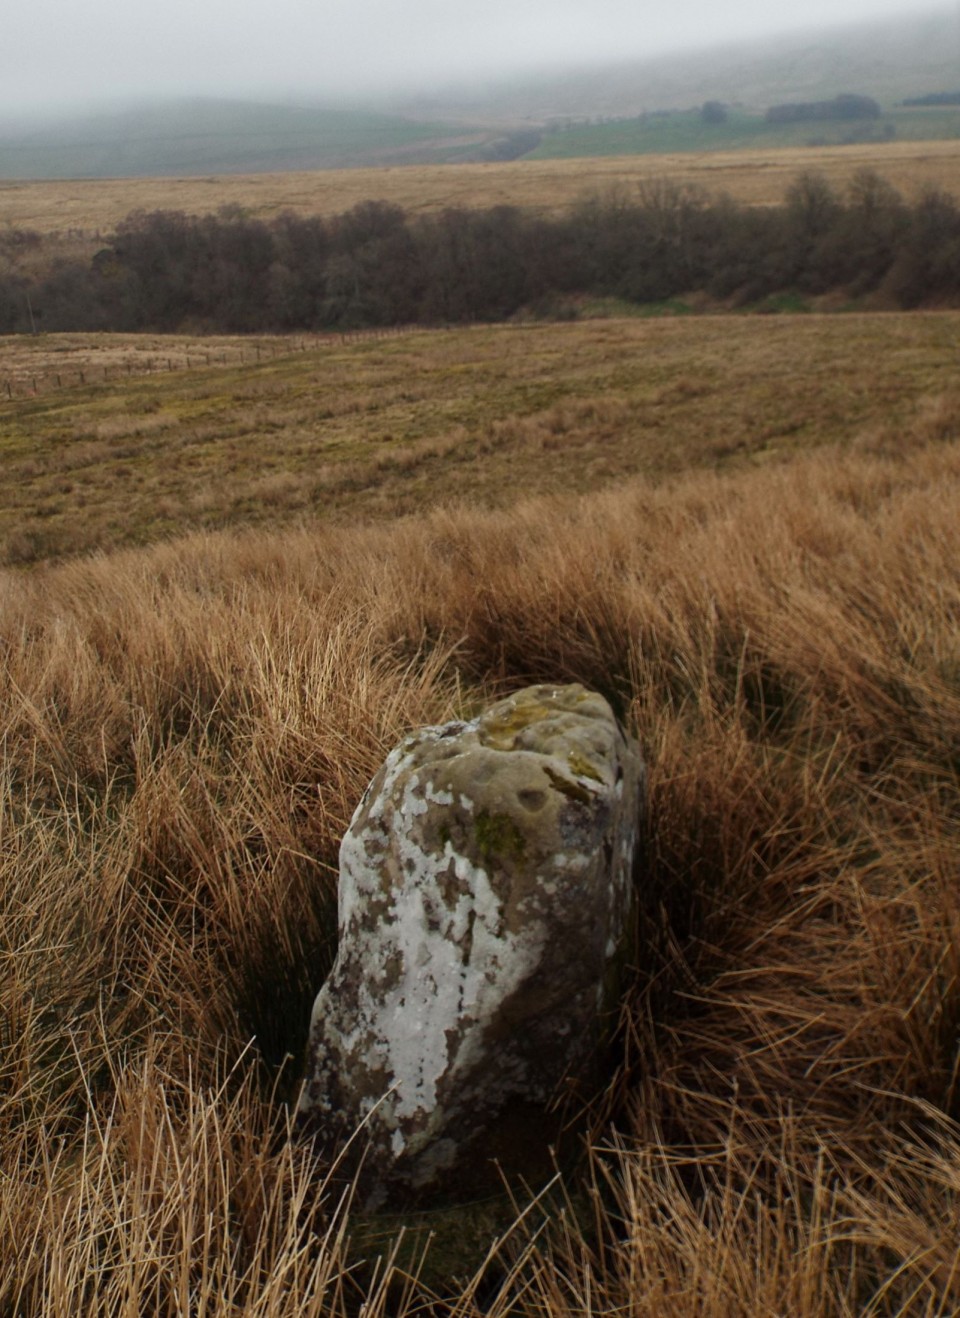 Buck Stone (Standing Stone / Menhir) by postman